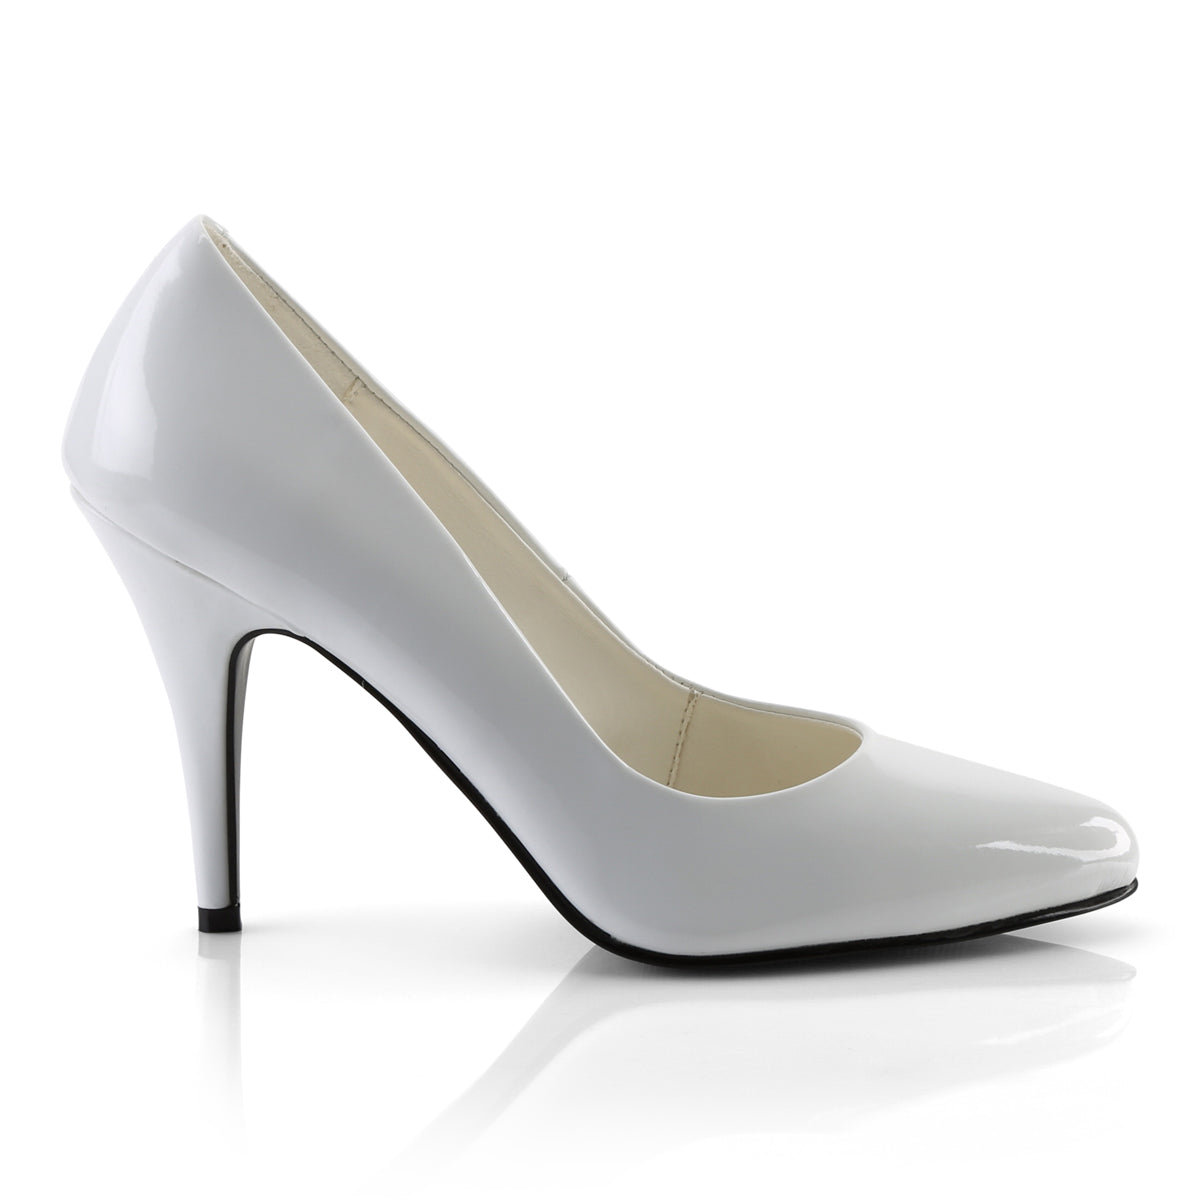 VANITY-420 Pleaser Shoe 4" Heel White Patent Fetish Footwear-Pleaser- Sexy Shoes Fetish Heels